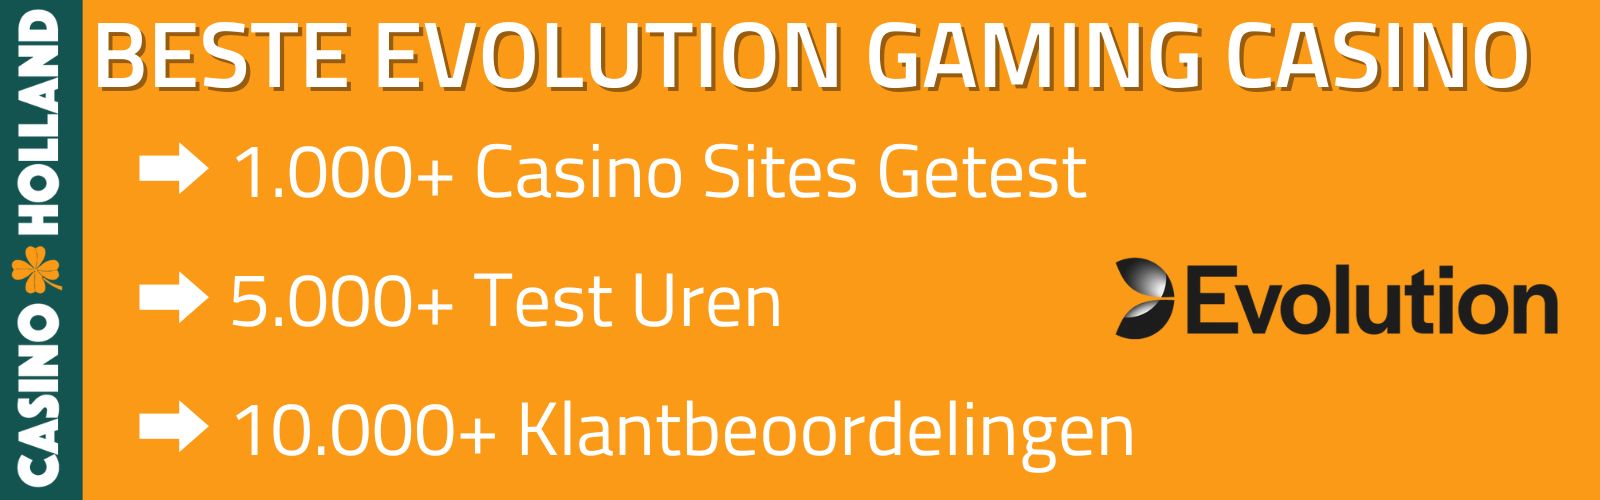 Evolution gaming casino (2)